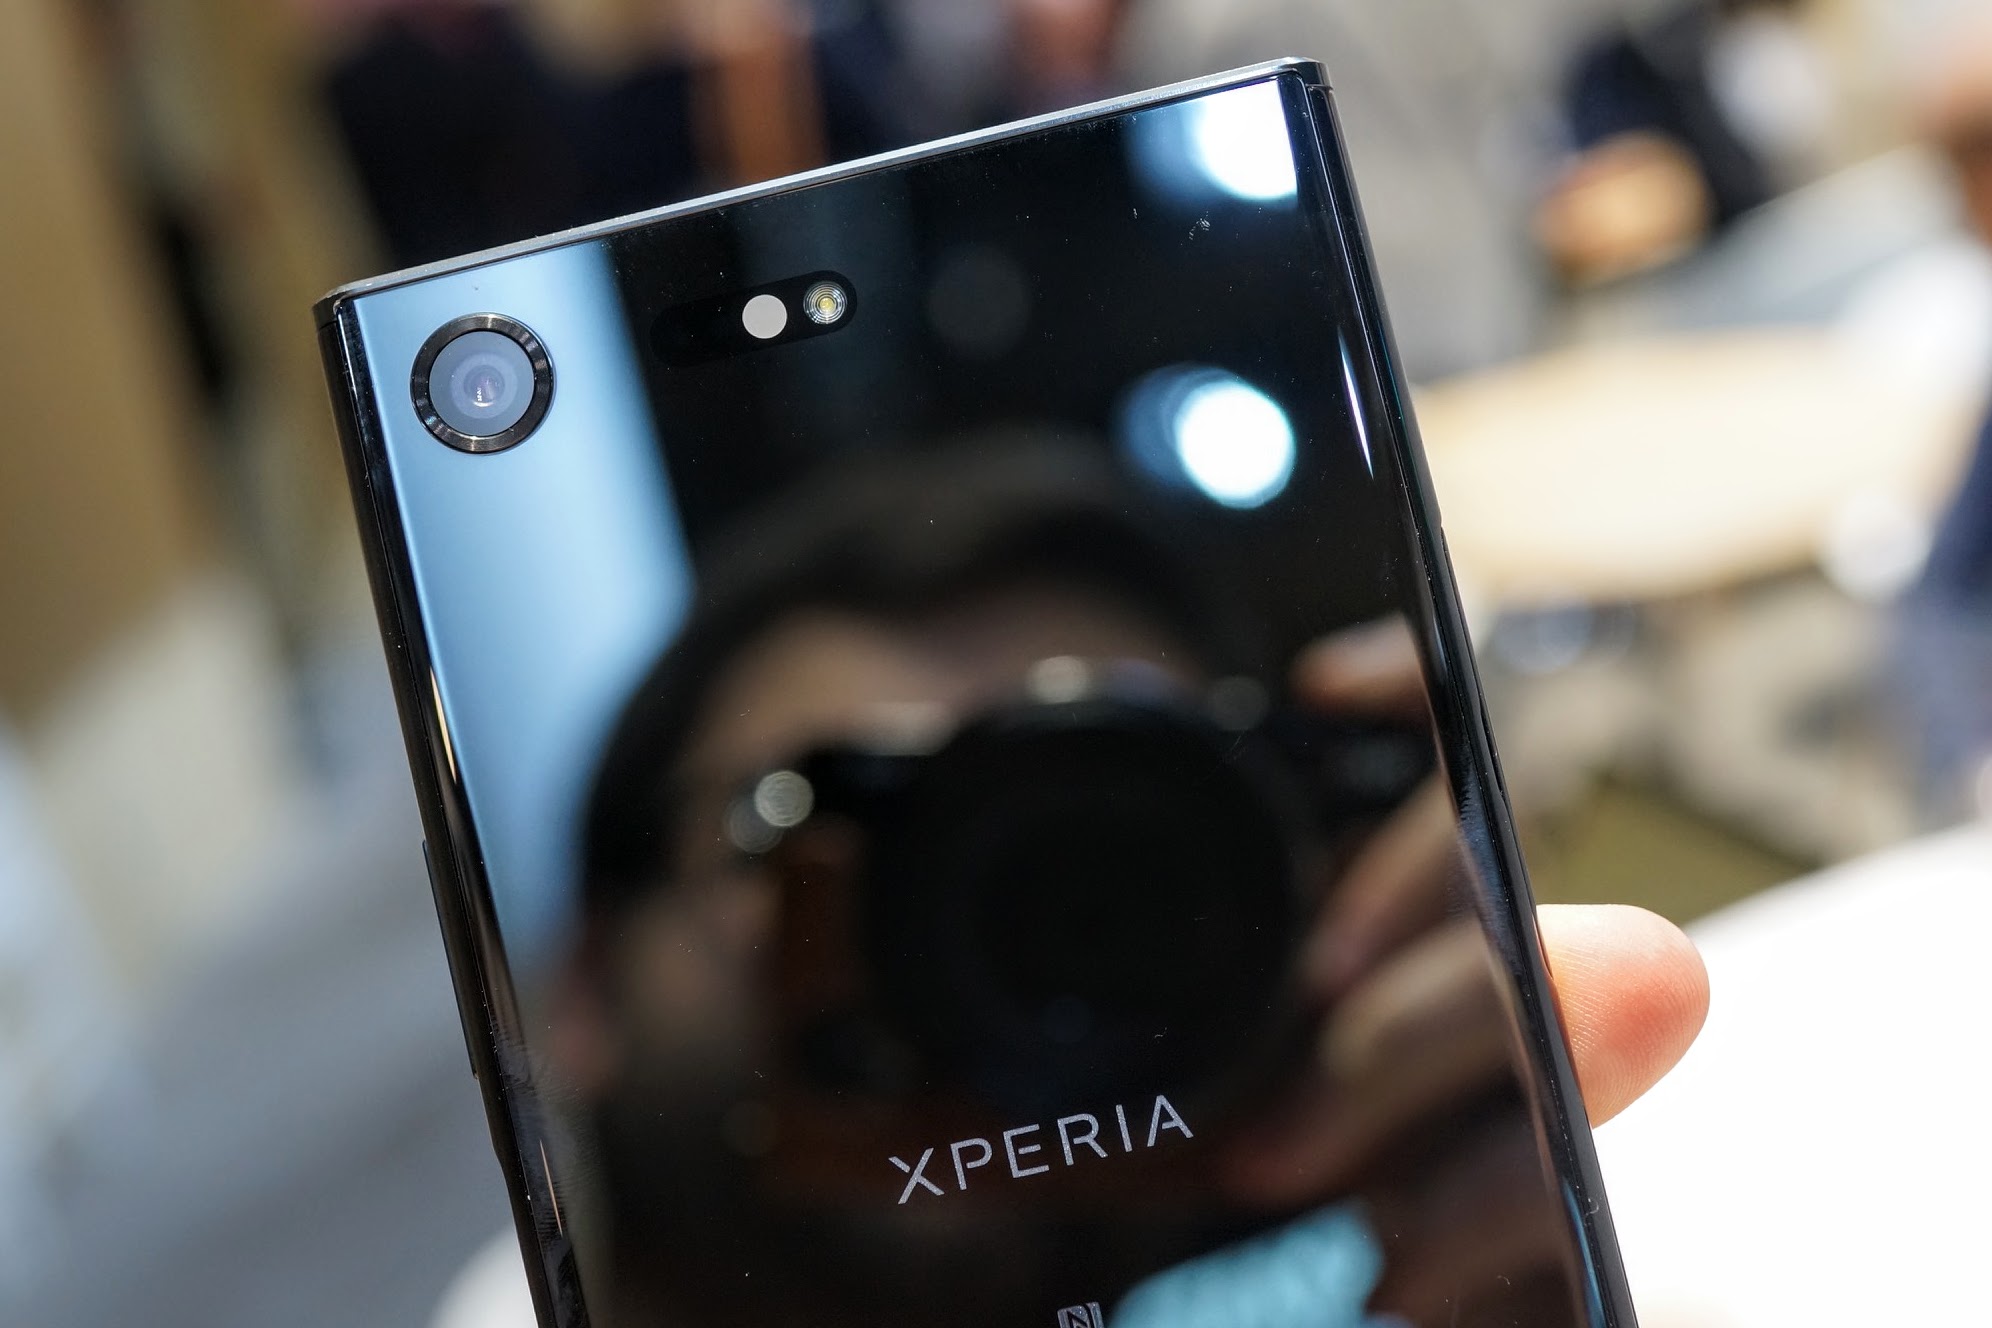 Le Sony Xperia XZ Premium arrive en juin